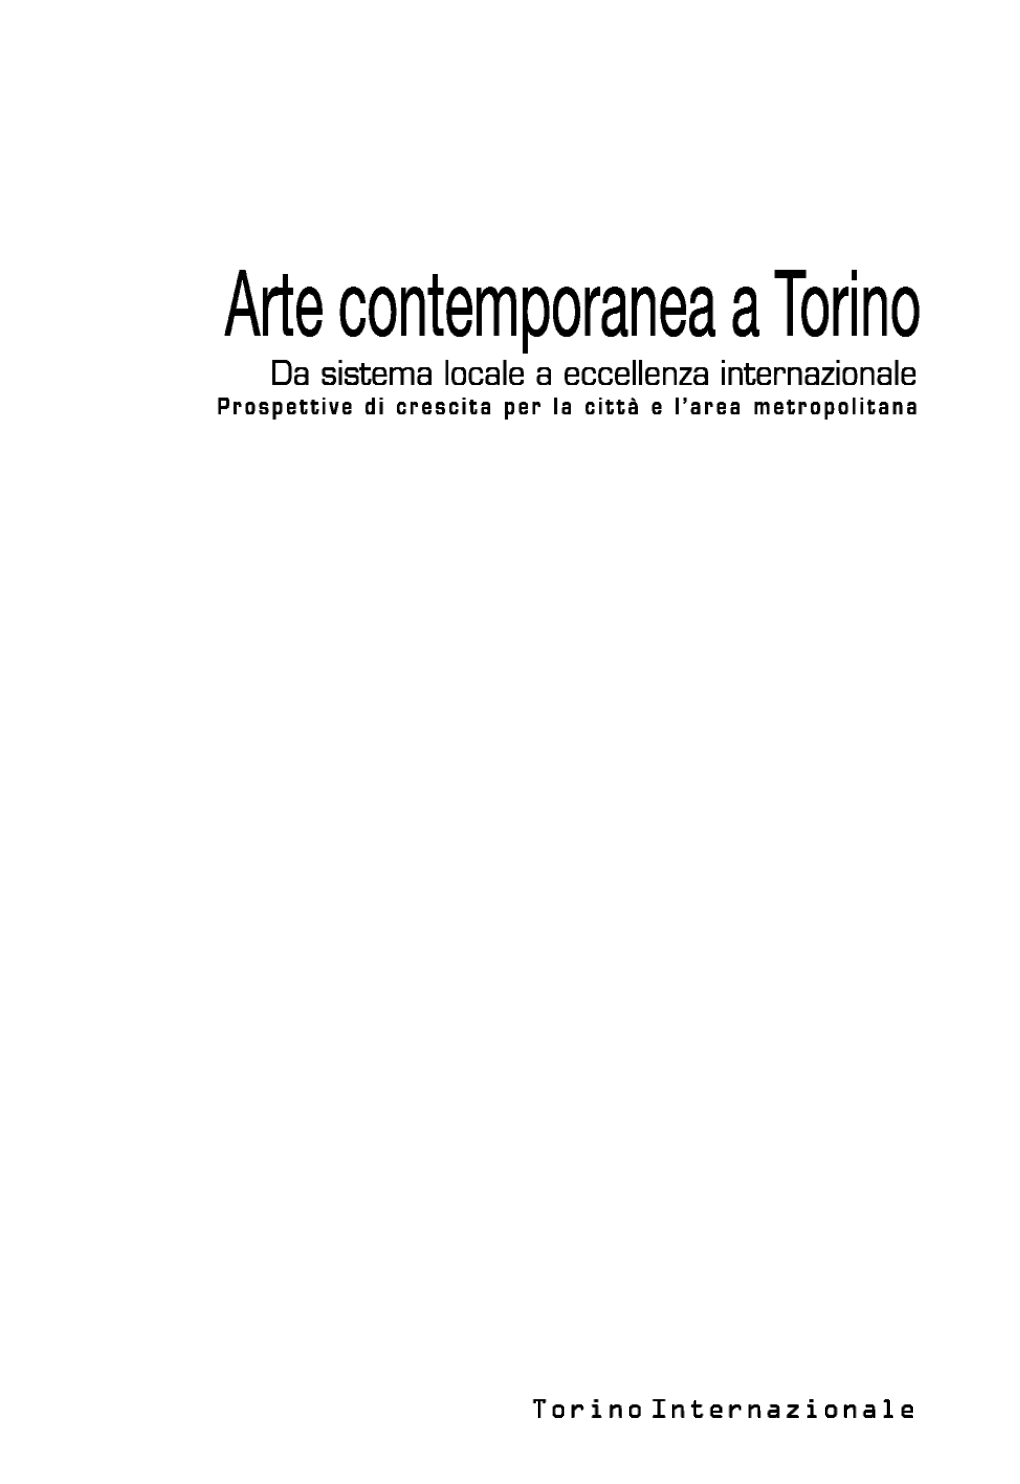 Arte Contemporanea a Torino